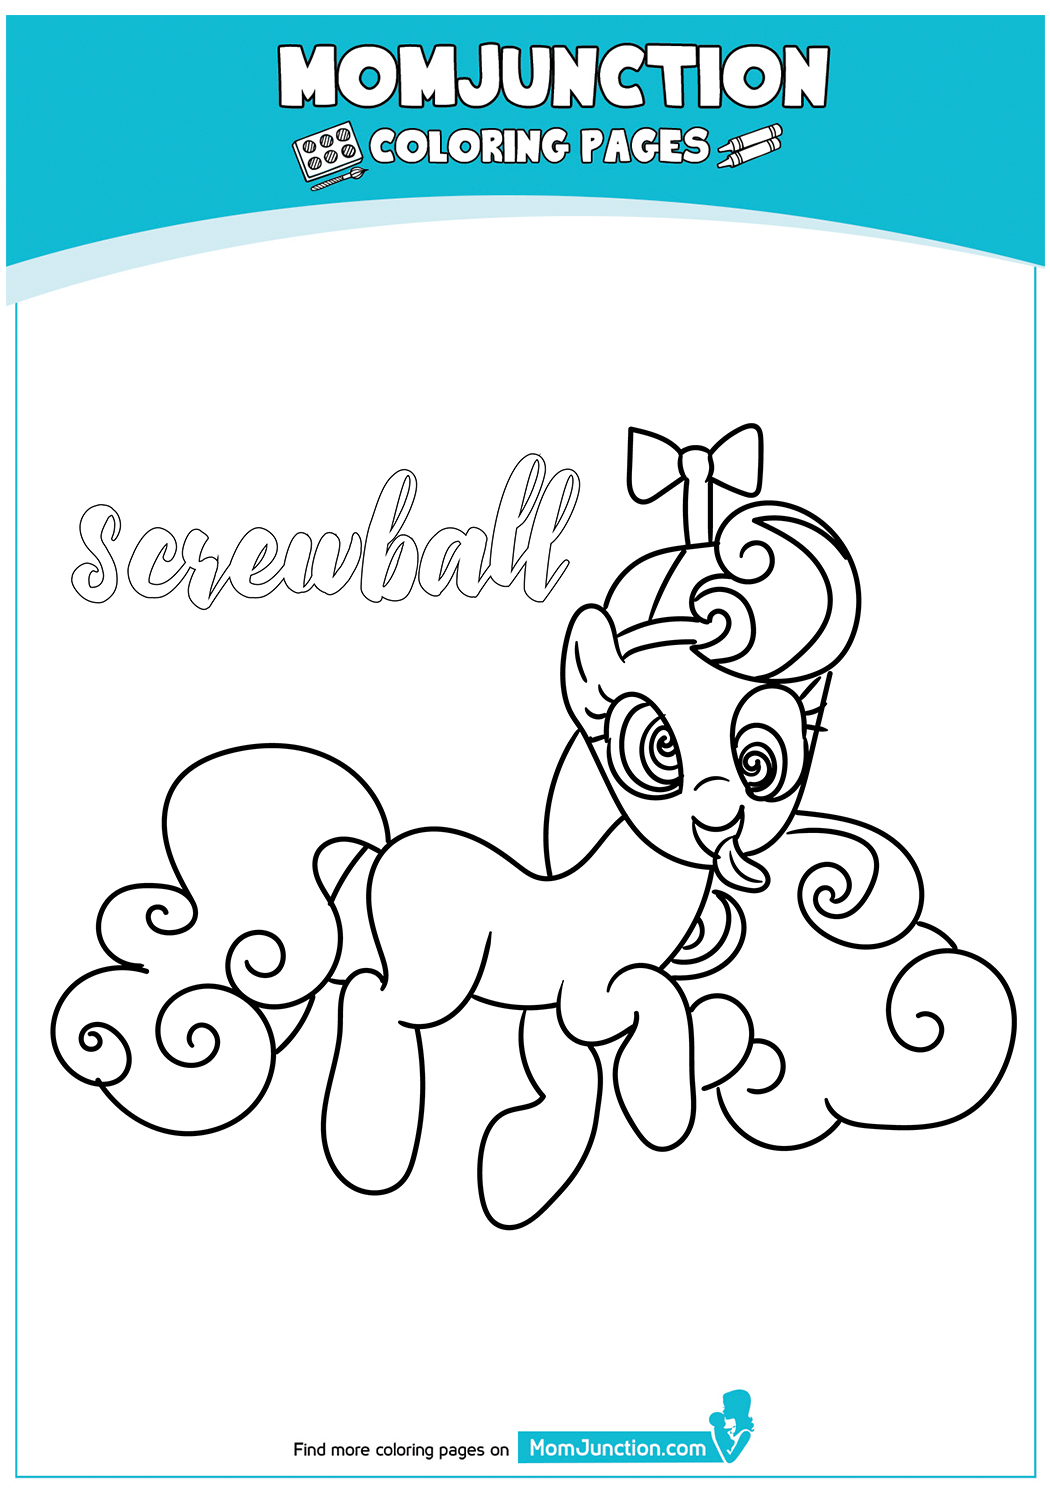 Screwball-17